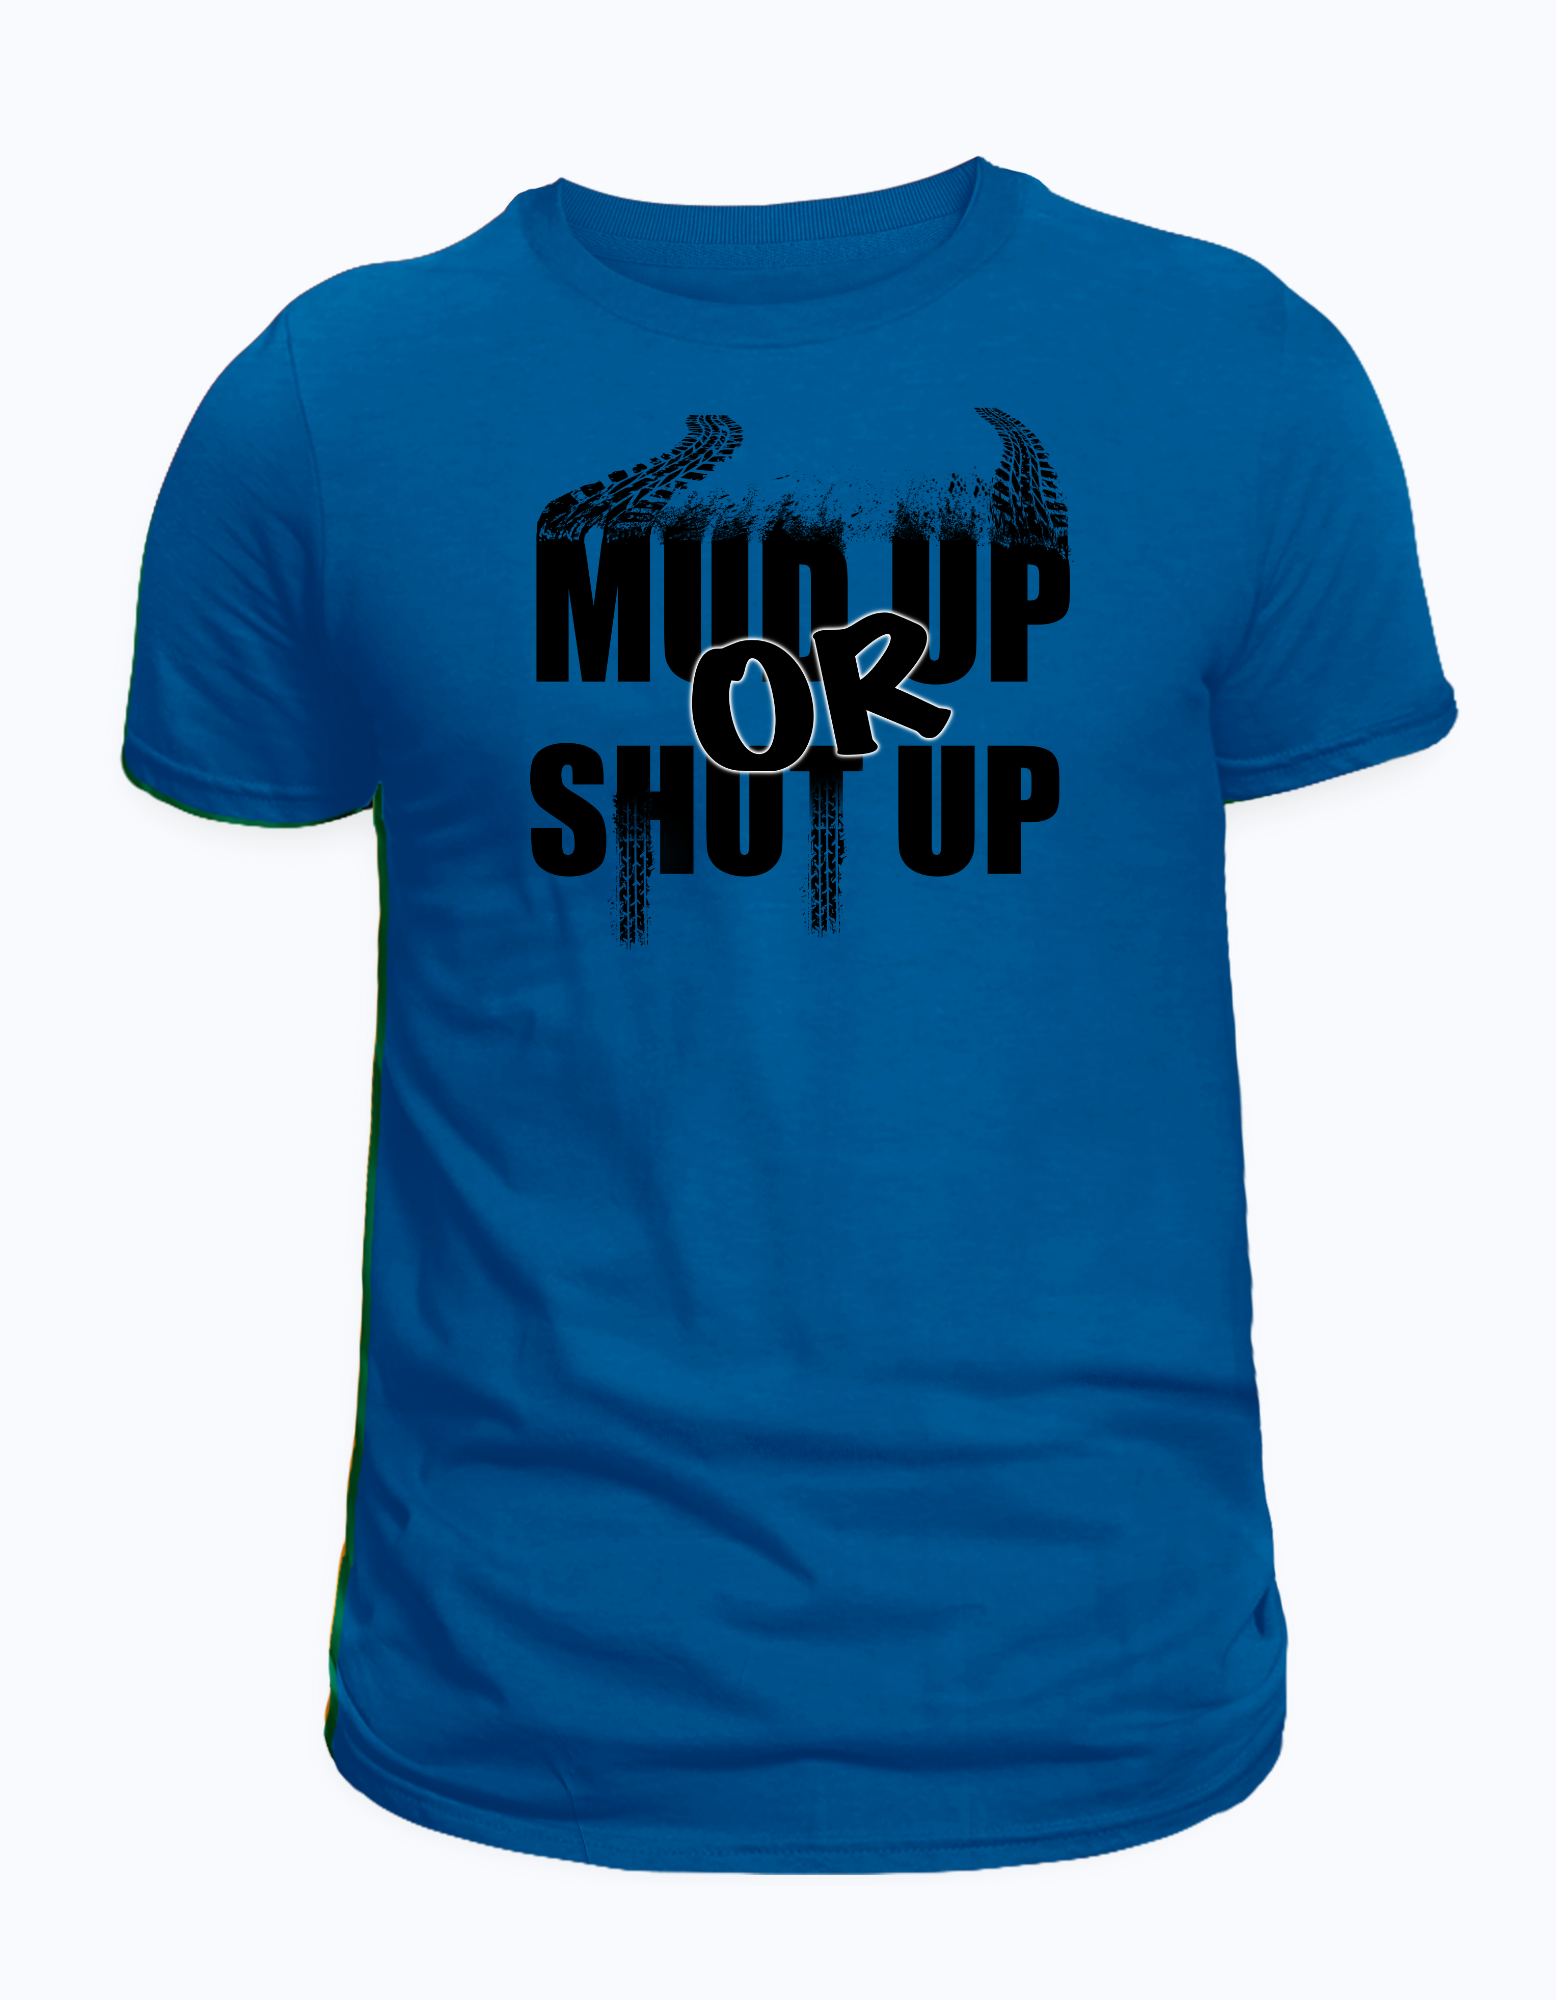 Mud Up Or Shut Up T-Shirt